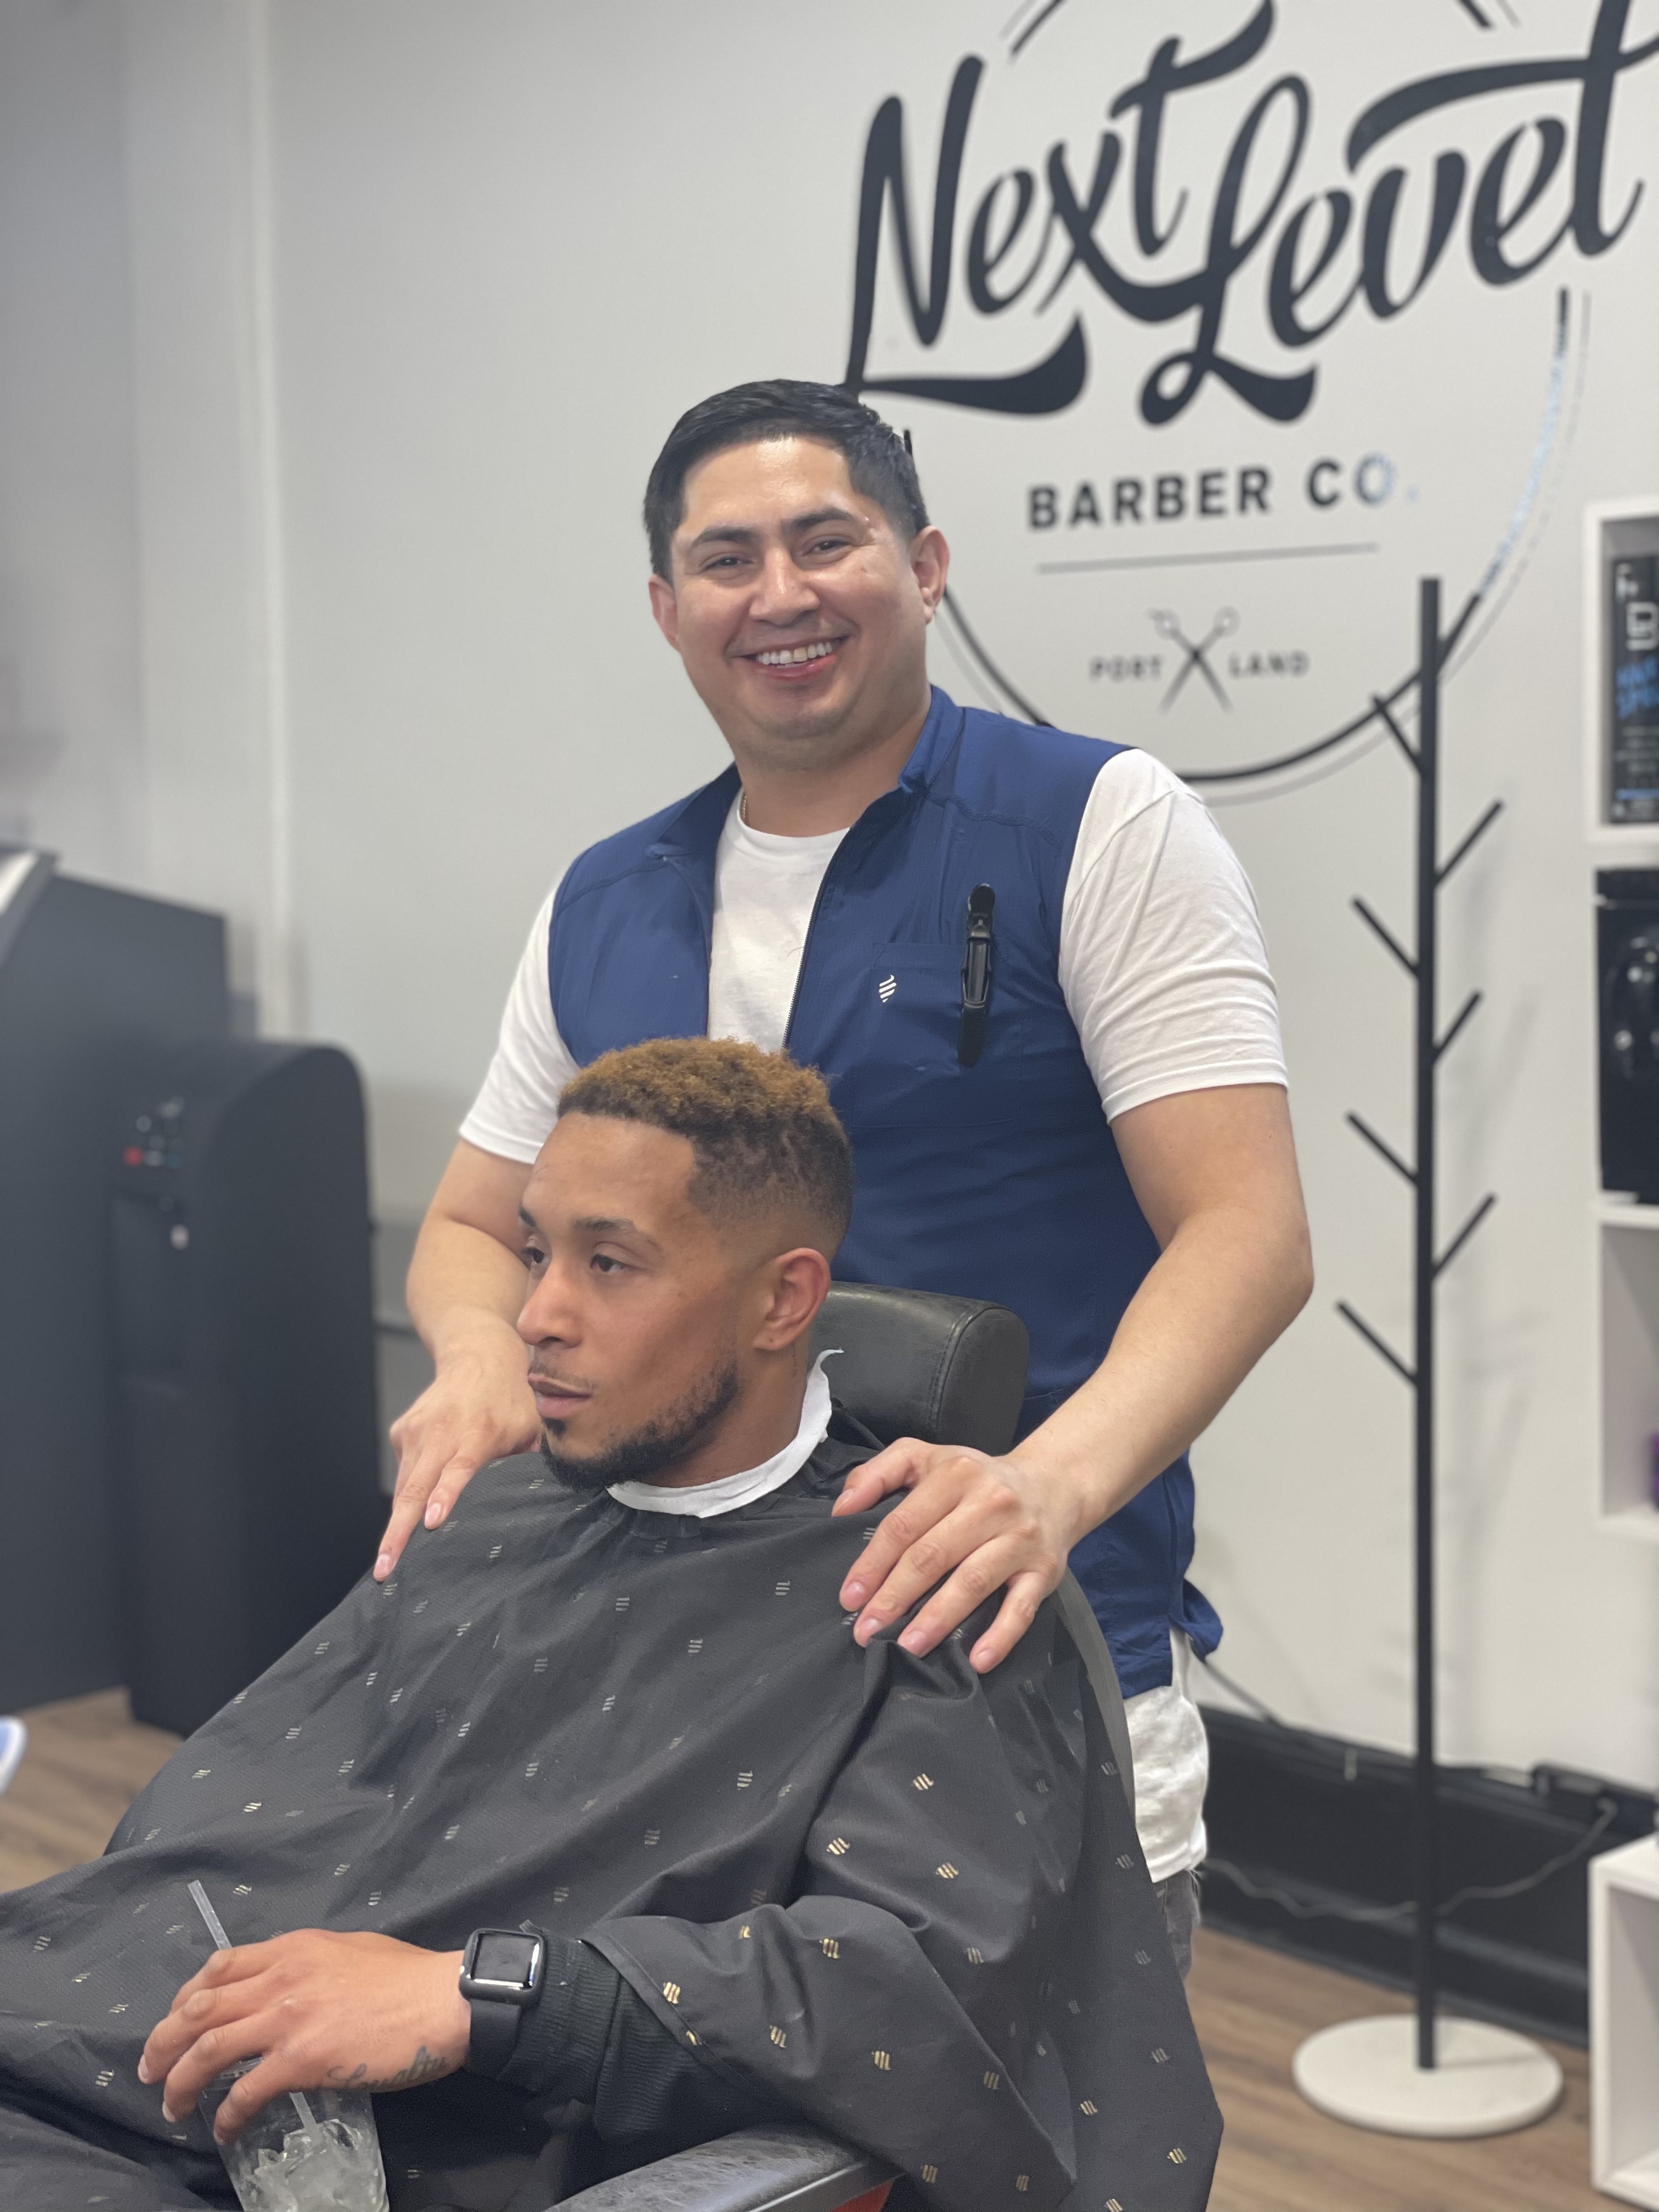 The Next Level Barbershop